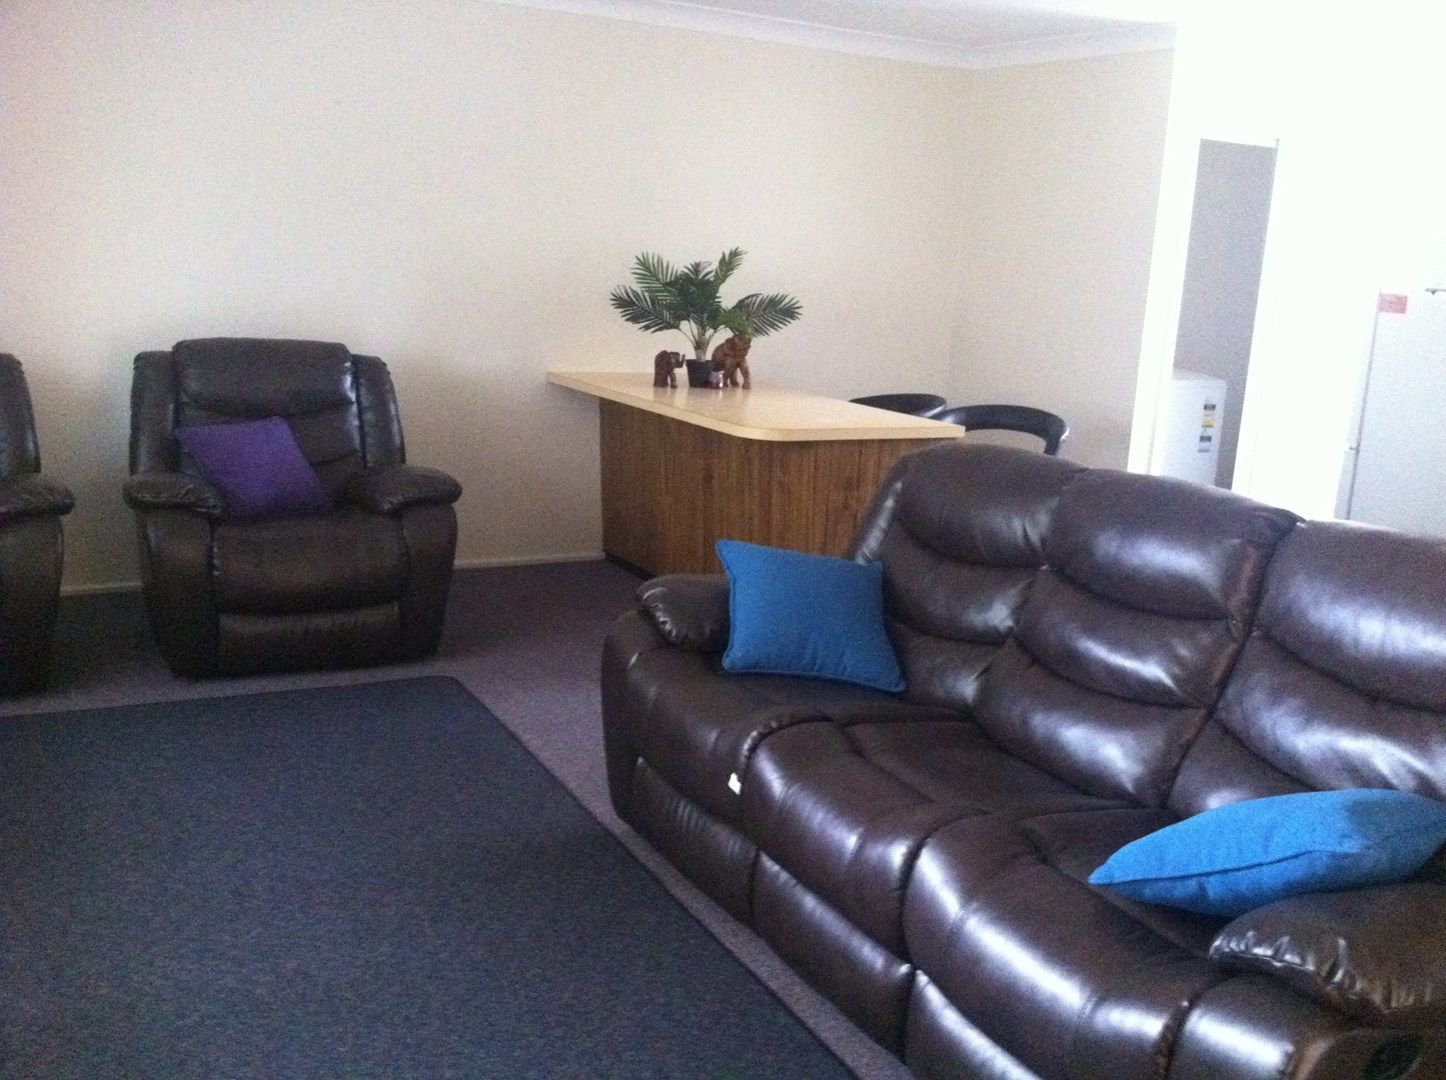 2 bedrooms Apartment / Unit / Flat in 12 Ugoa street NARRABRI NSW, 2390